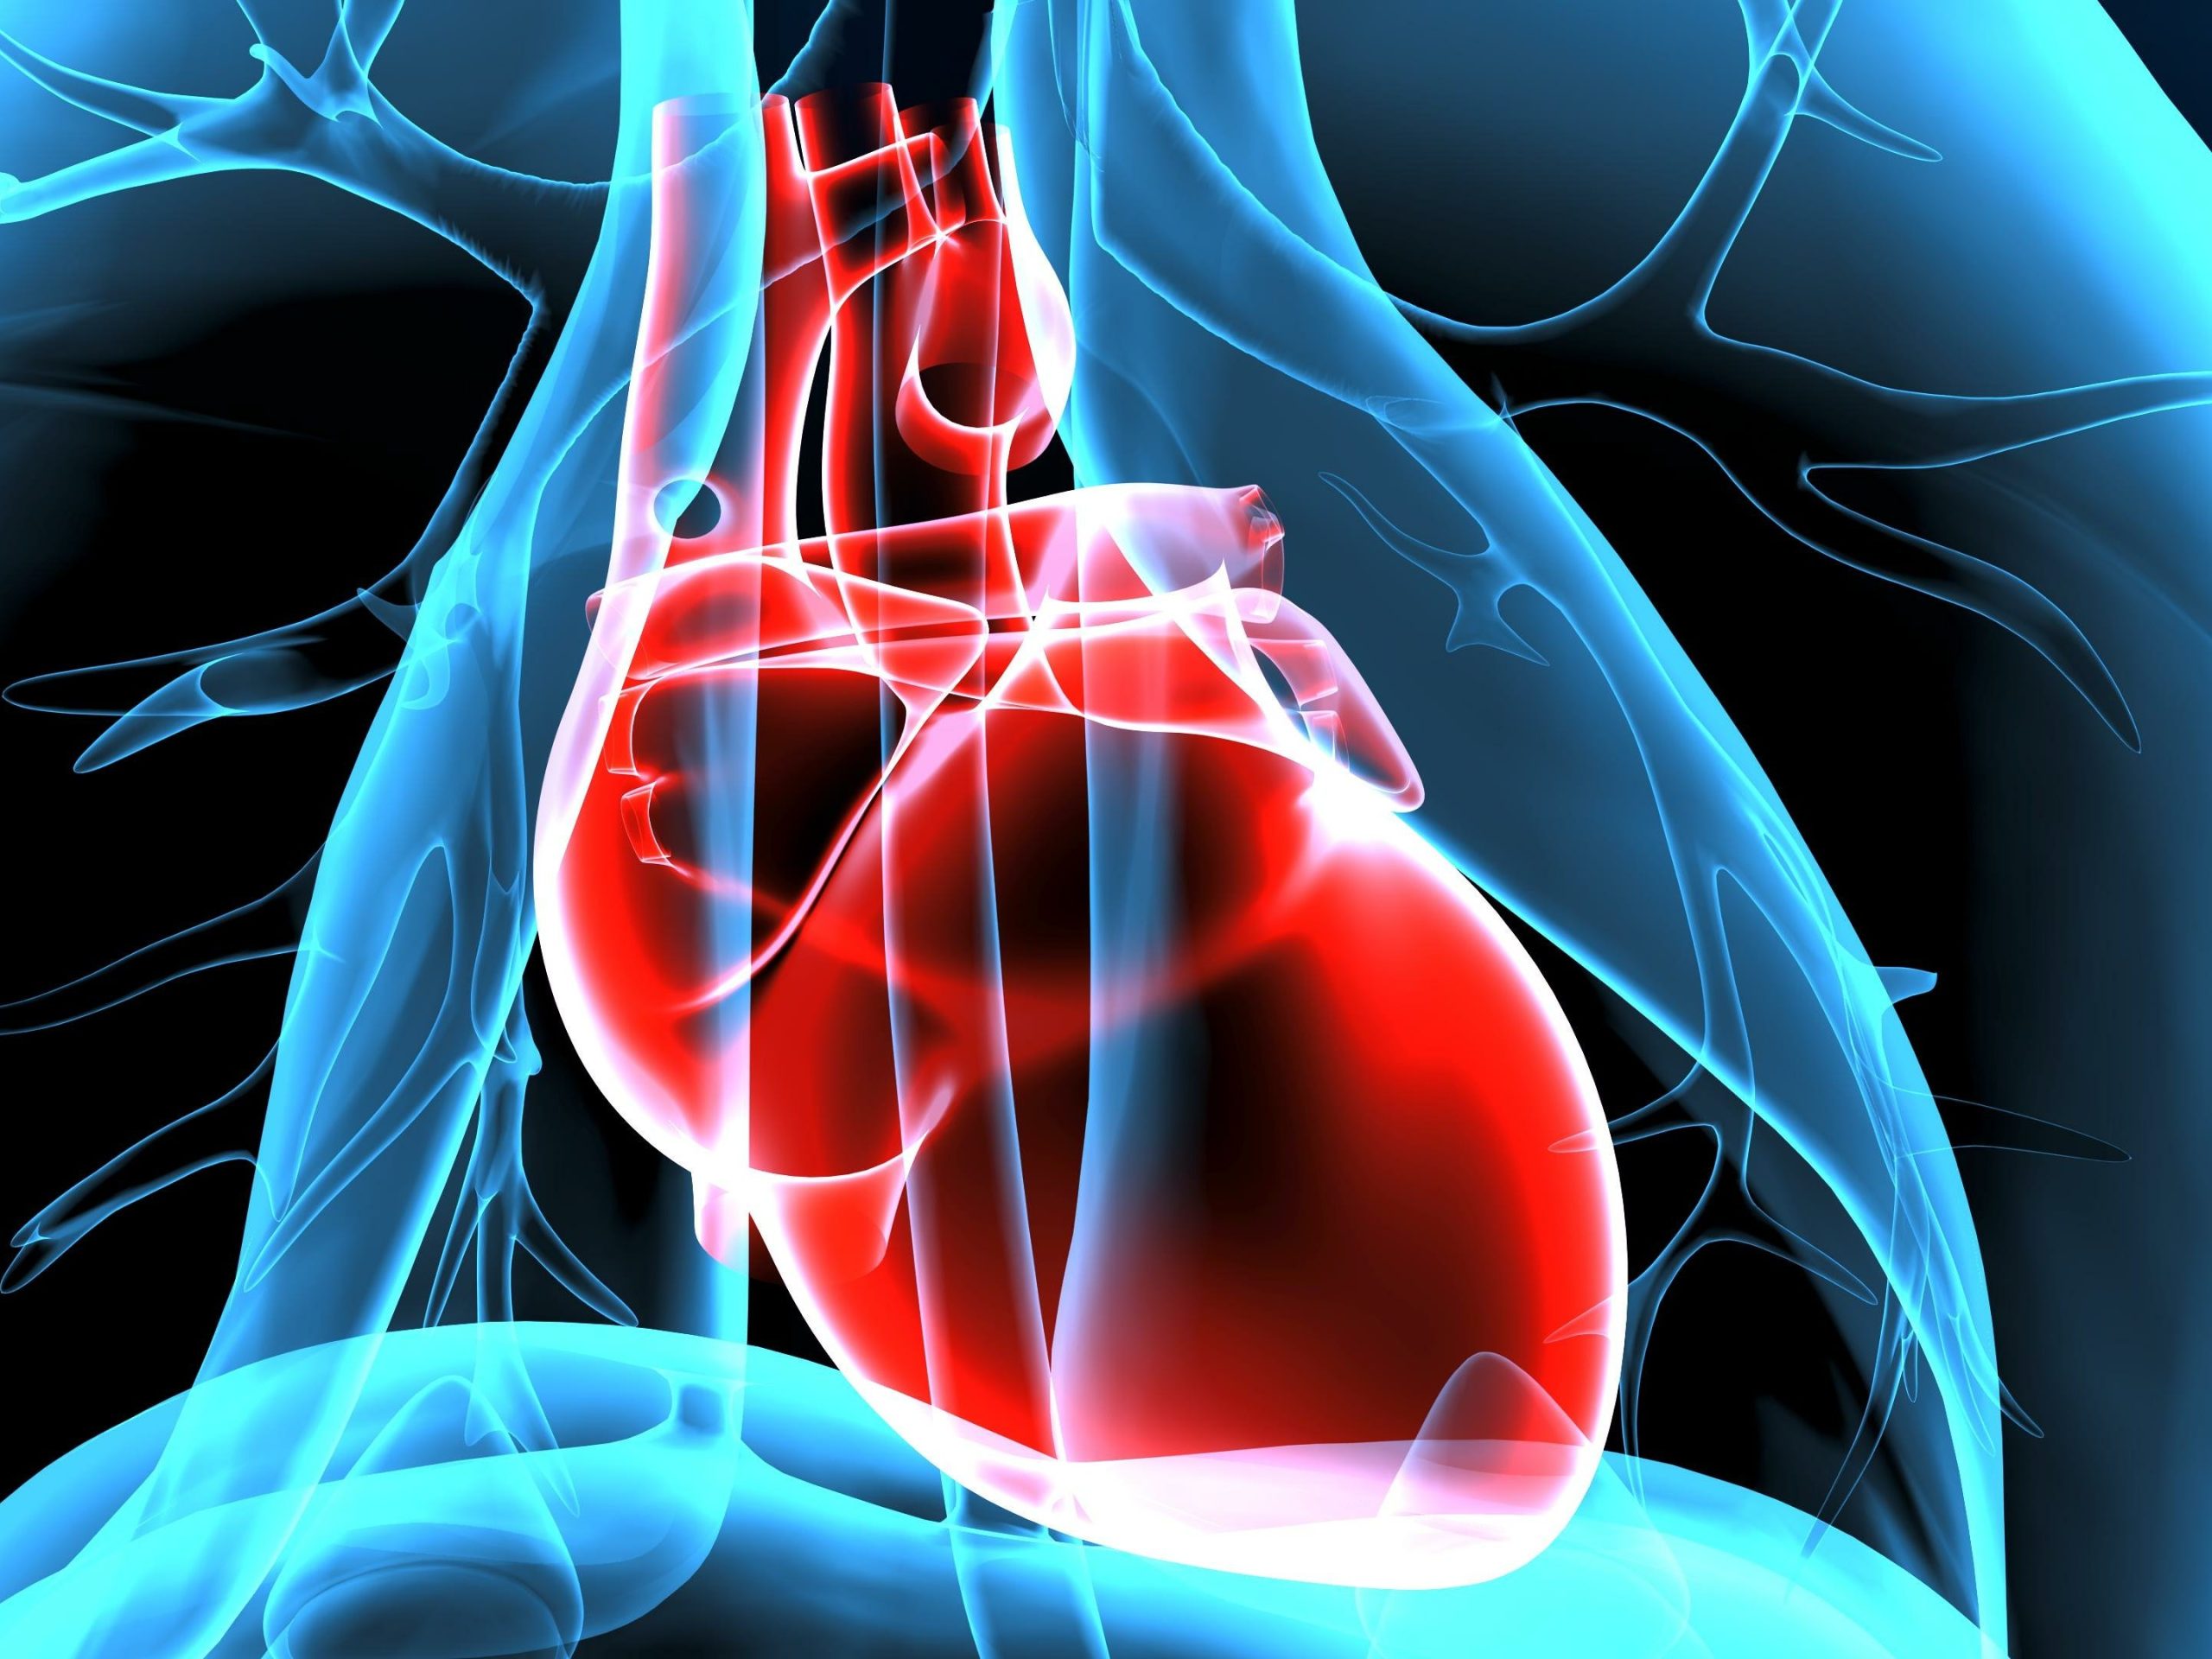 3d illustration human body heart